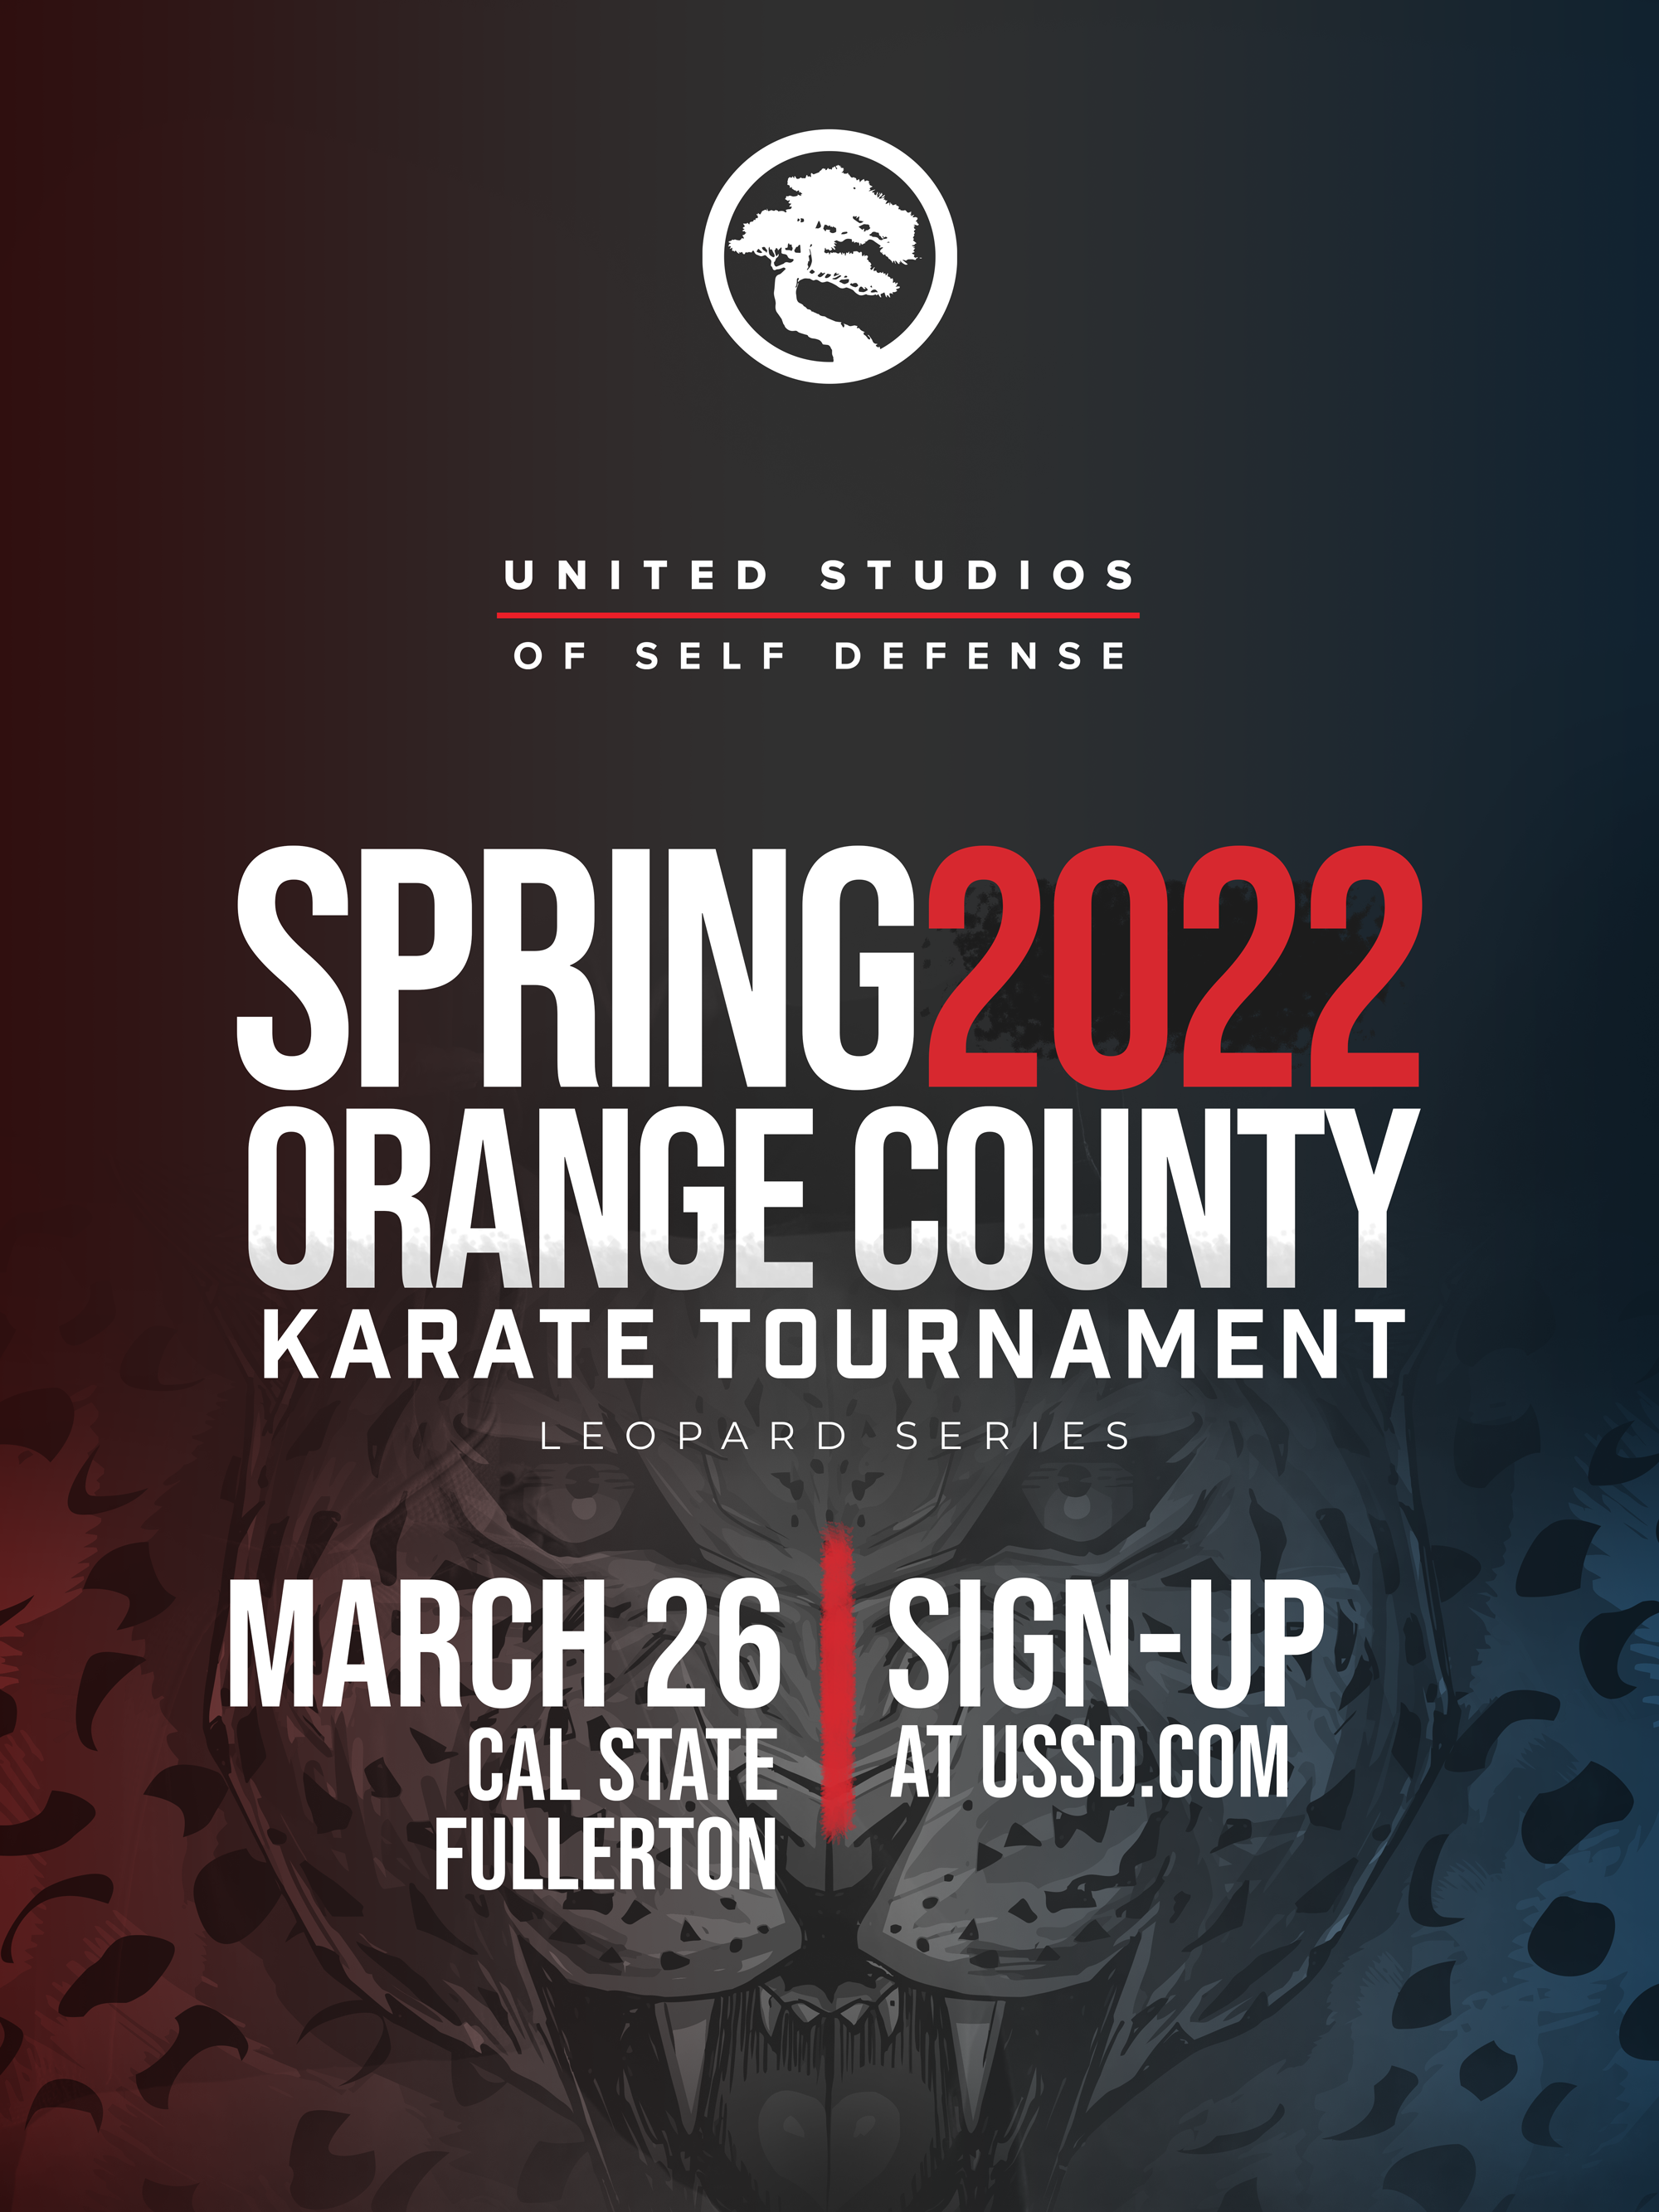 2021 San Diego USSD United Studios of Self Defense Kempo Karate Tournament